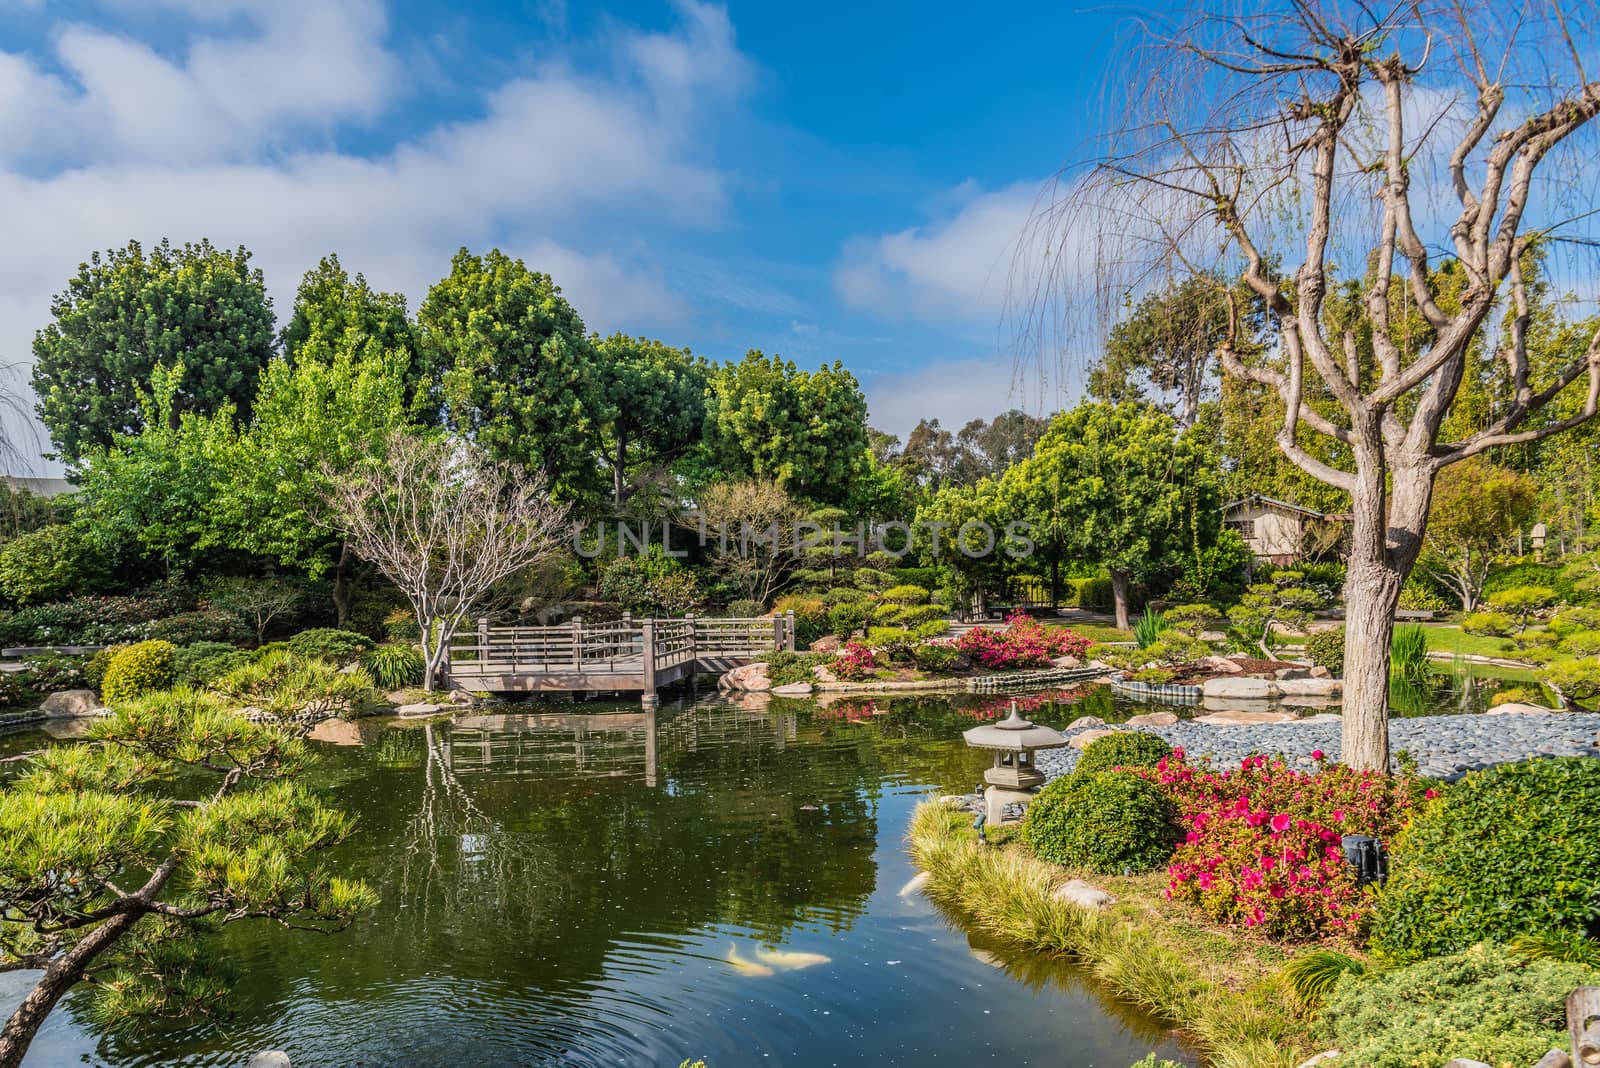 USA Gardens. Pond Bridges. Earl Burns Miller. Japanese Garden. Long Beach Trees Shrubs. by bhavik_jagani